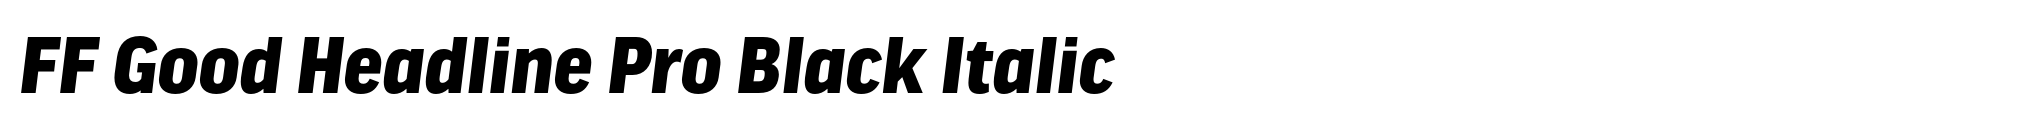 FF Good Headline Pro Black Italic image